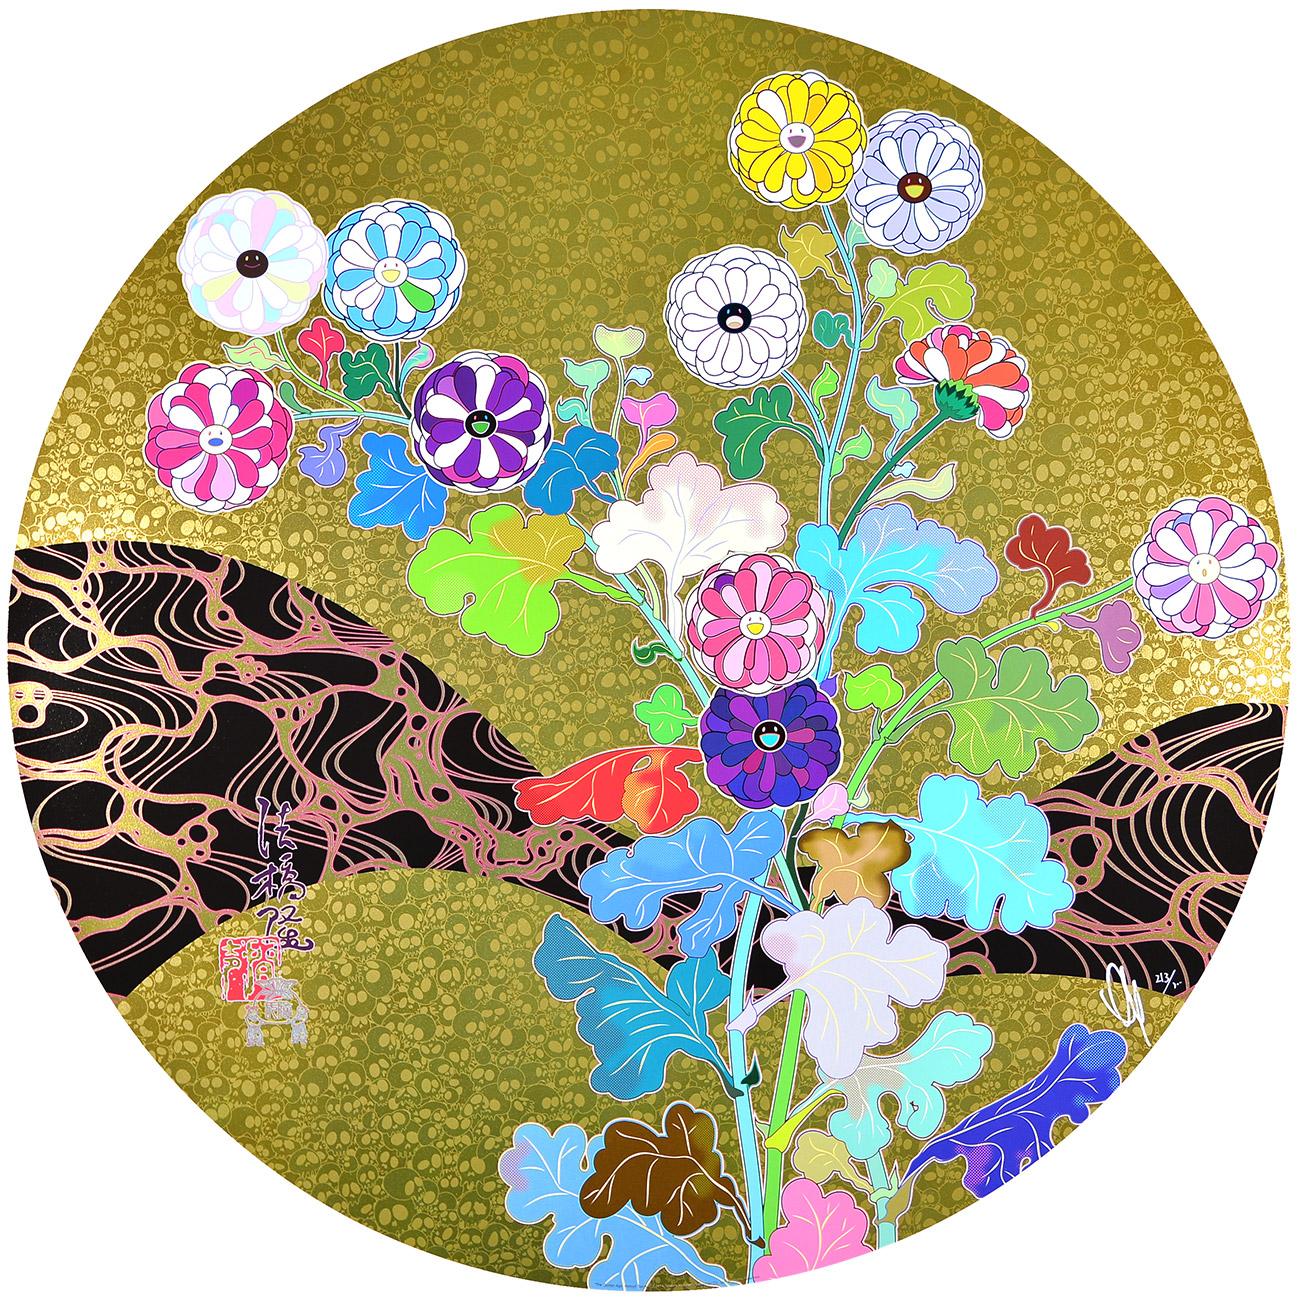 THE GOLDEN AGE: HOKKYO TAKASHI Hand signed Superflat Pop Art Gold Skulls Flowers